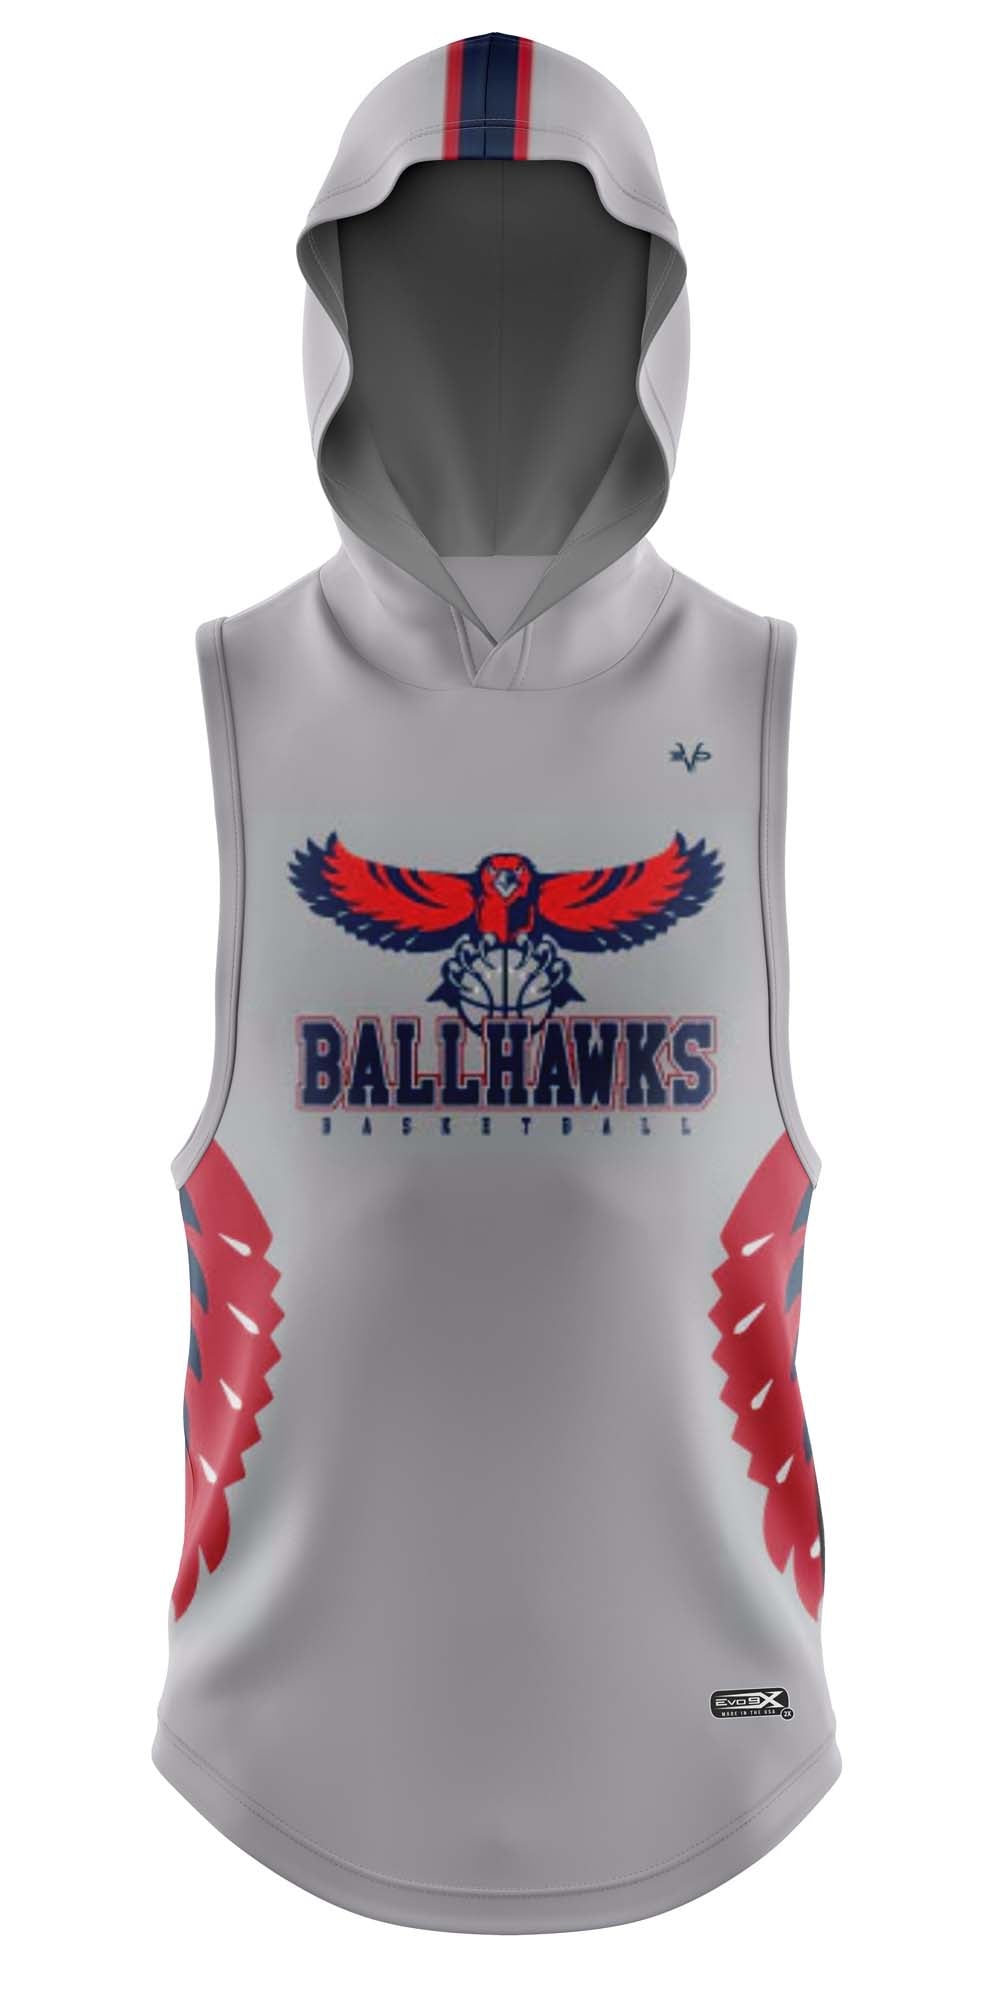 DAVINCI BALLHAWKS BASKETBALL Sublimated Sleeveless T-Shirt Hoodie